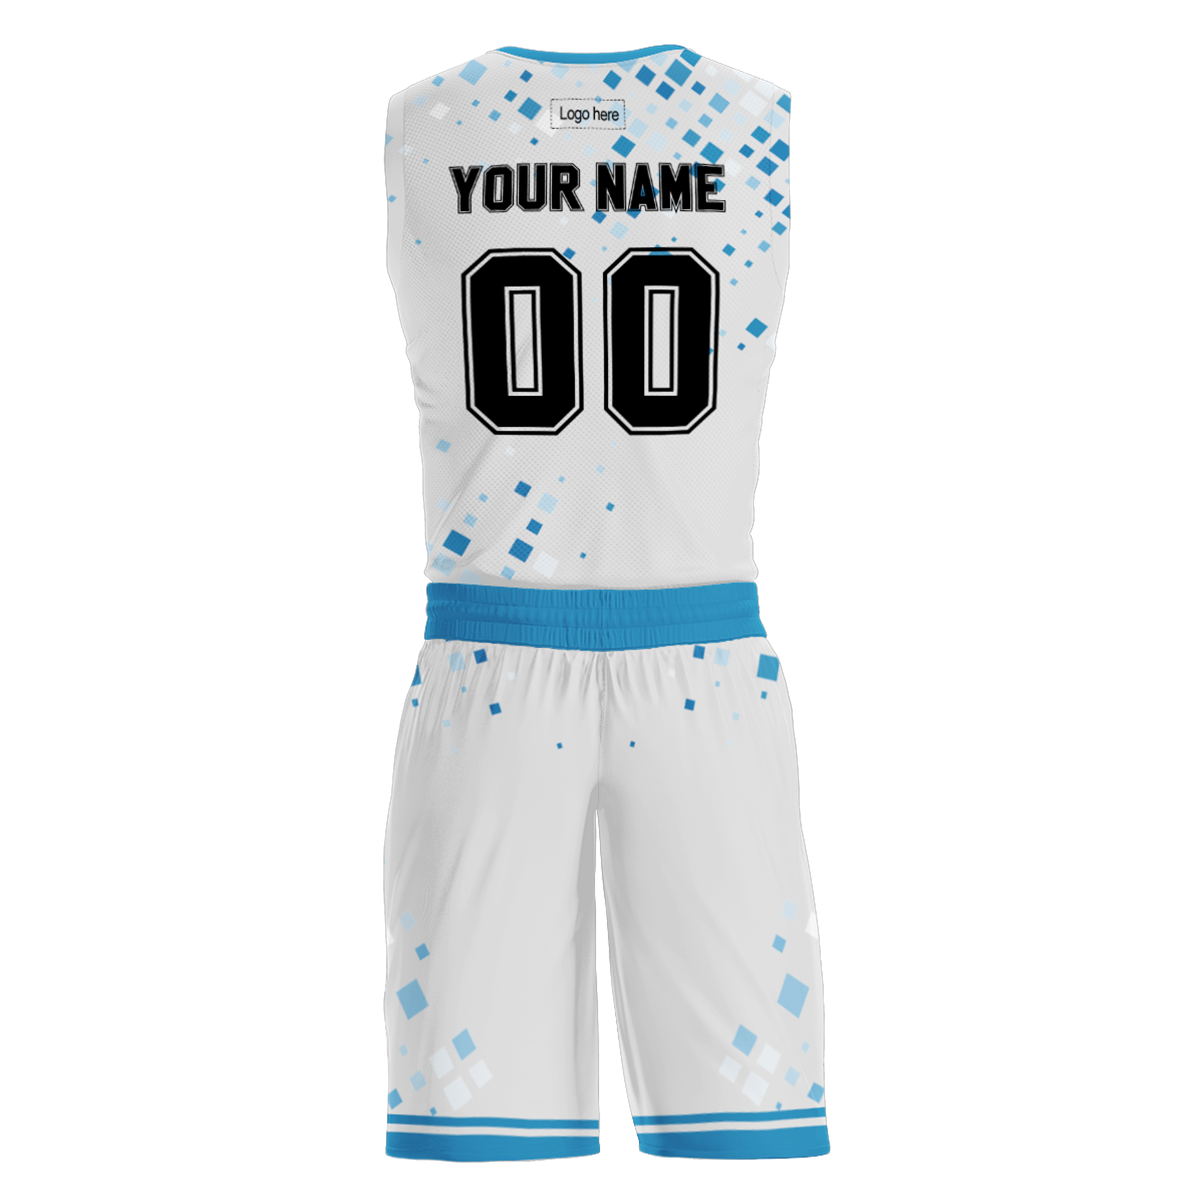 Custom Sublimation Basketball Wear Clothes T Shirt Team Uniforms Set Men Print on Demand Basketball Jersey Suits